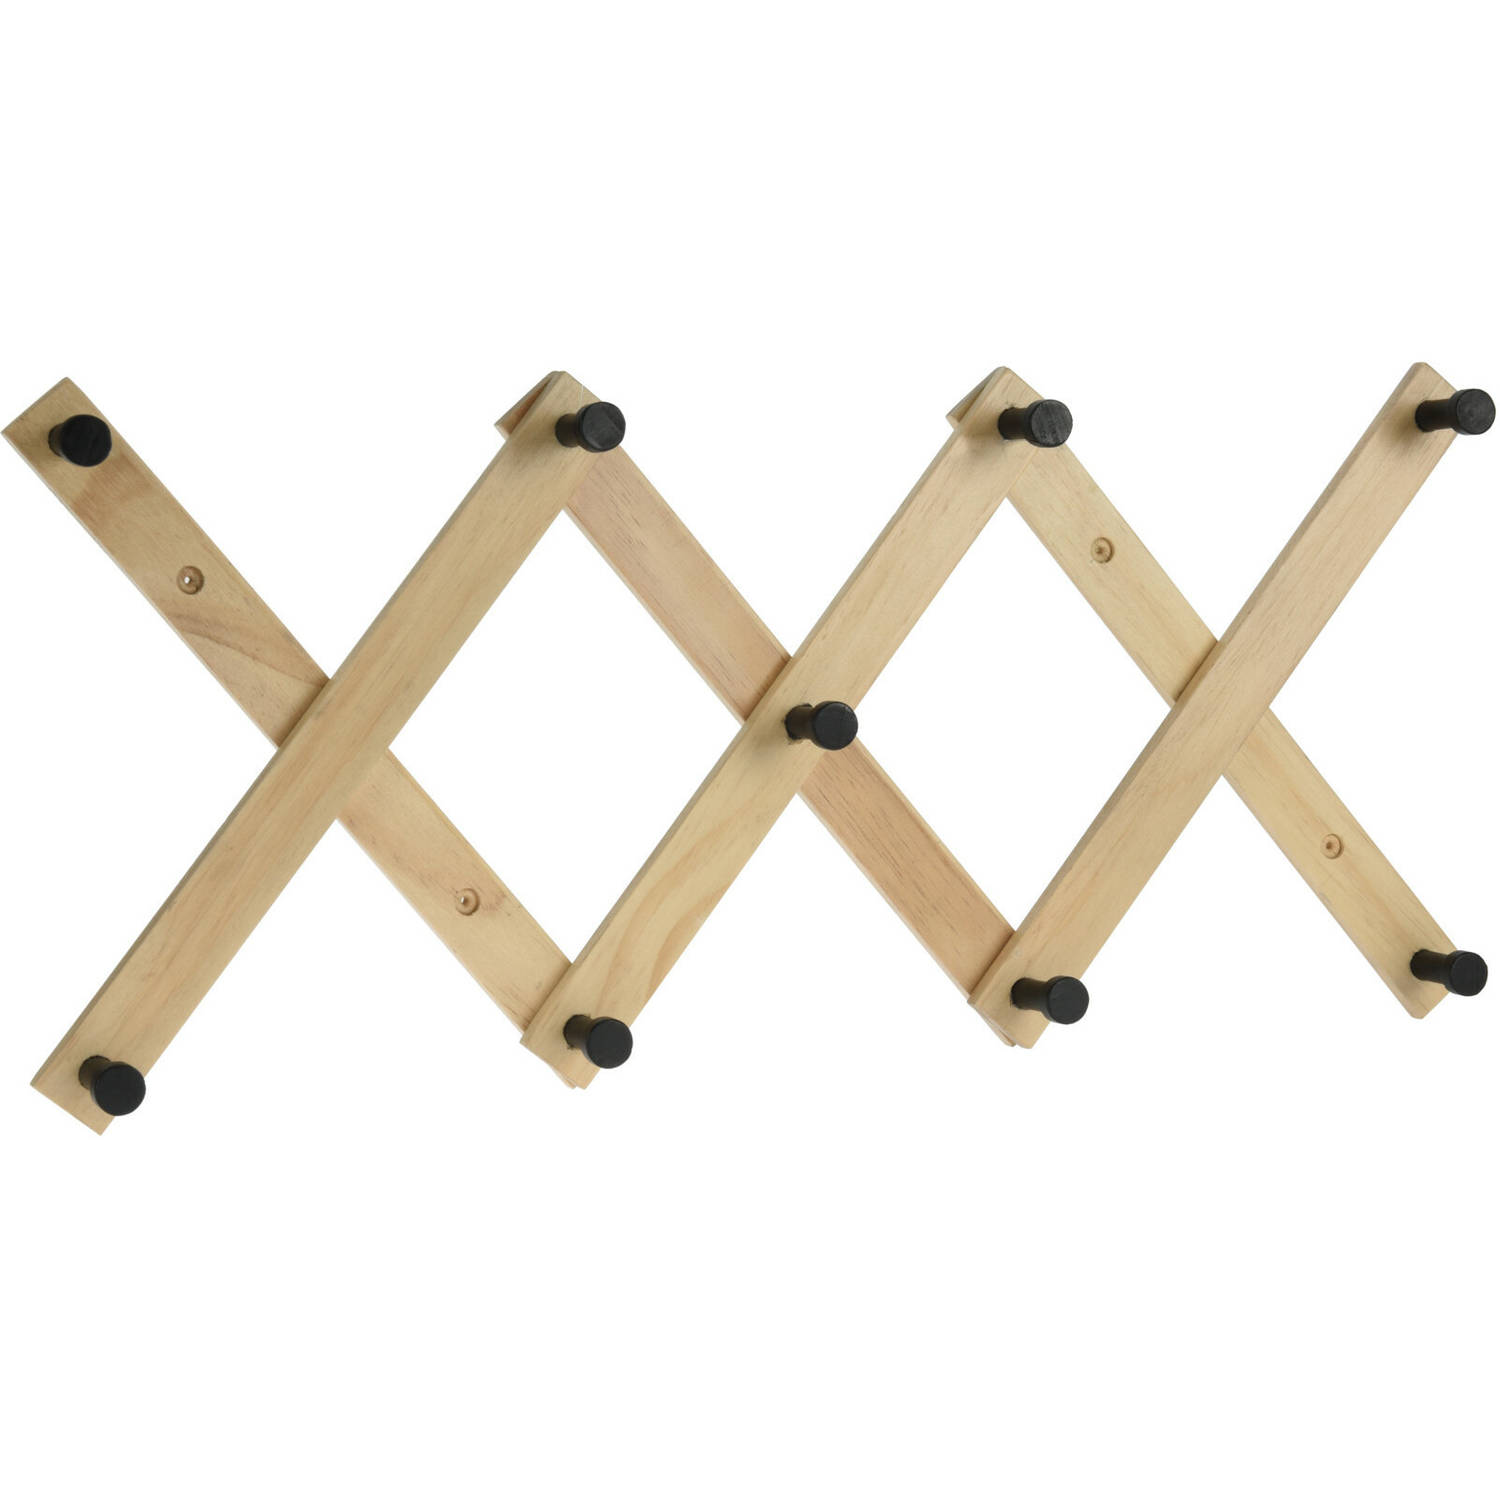 Kinderkamer deurhanger/kapstok verstelbaar - 9 zwarte haakjes - hout - 60 x 12 cm - Kapstokken